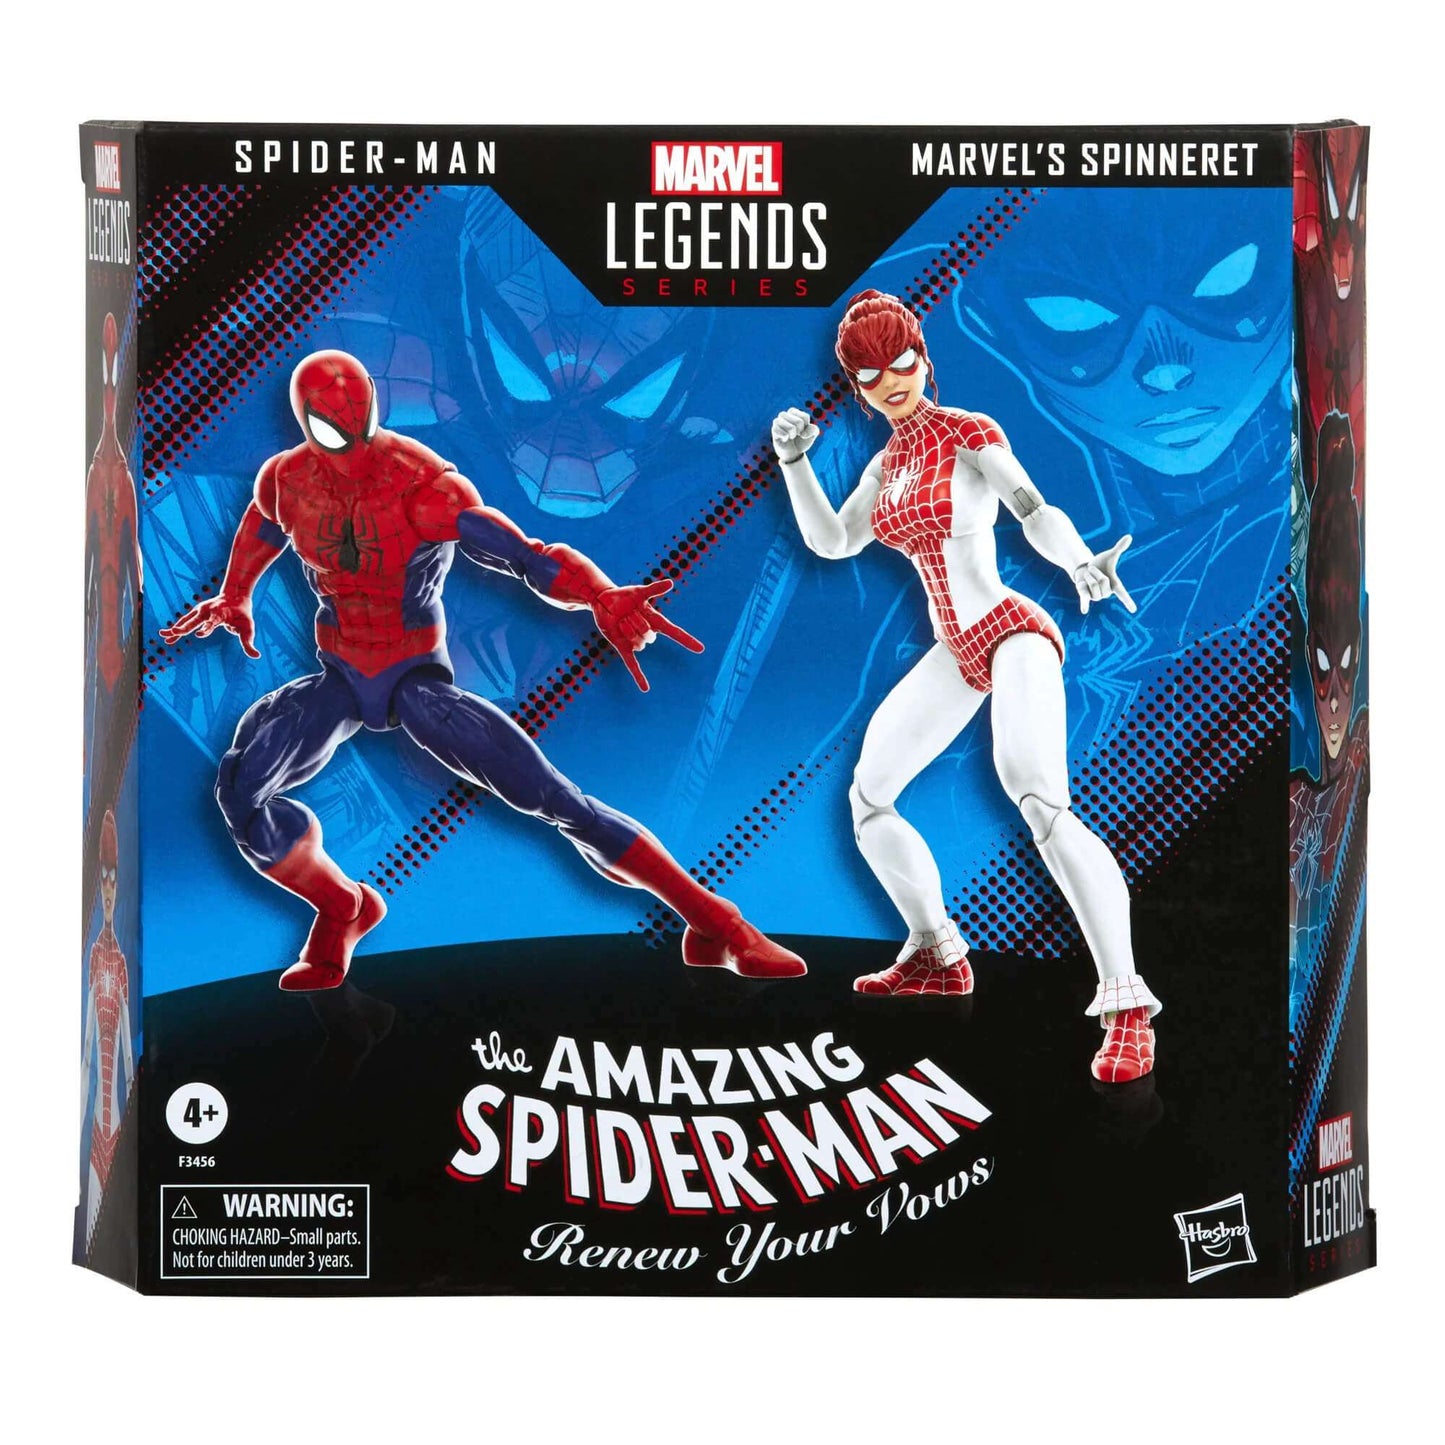 Marvel Legends Series Spider-Man and Marvel’s Spinneret action figures front of packaging